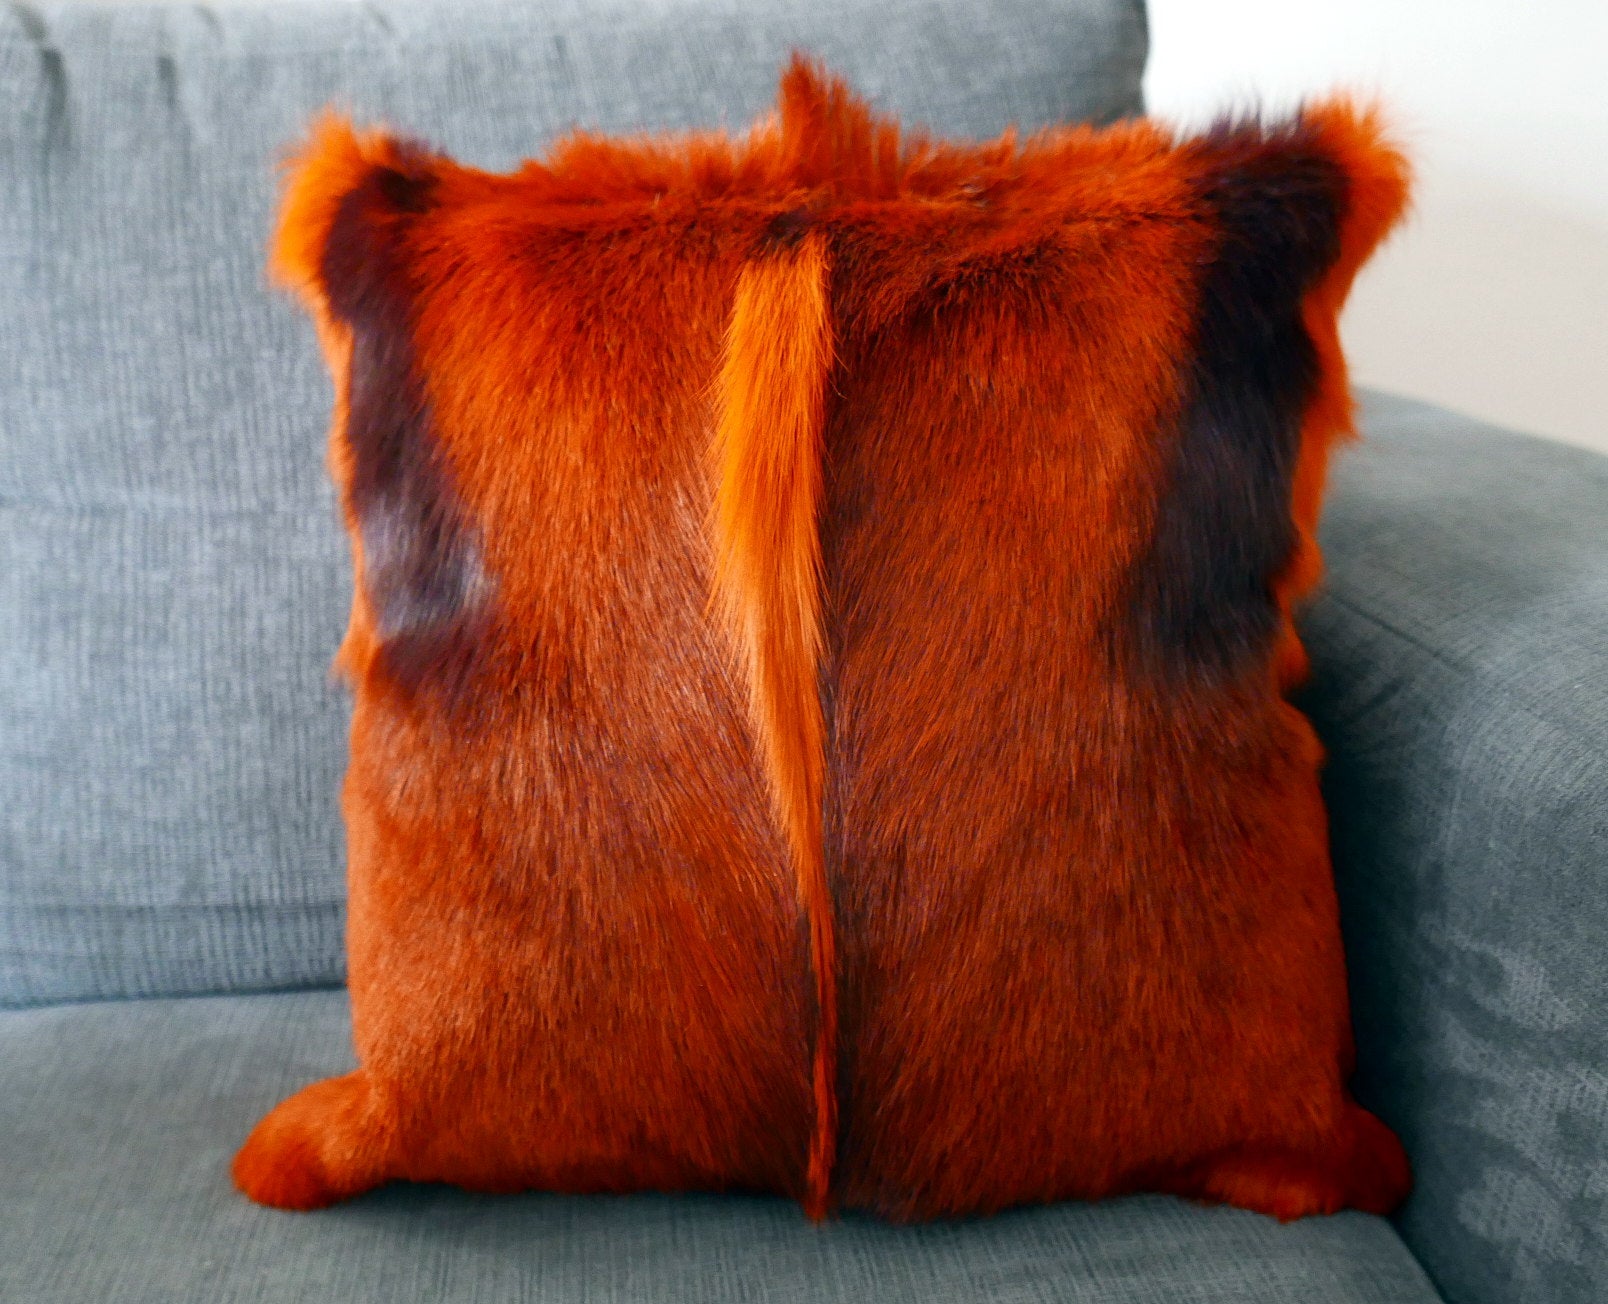 Burnt Orange Springbok Pillow Cover - Size: 15x15" (similar to cow hide skin pillow)